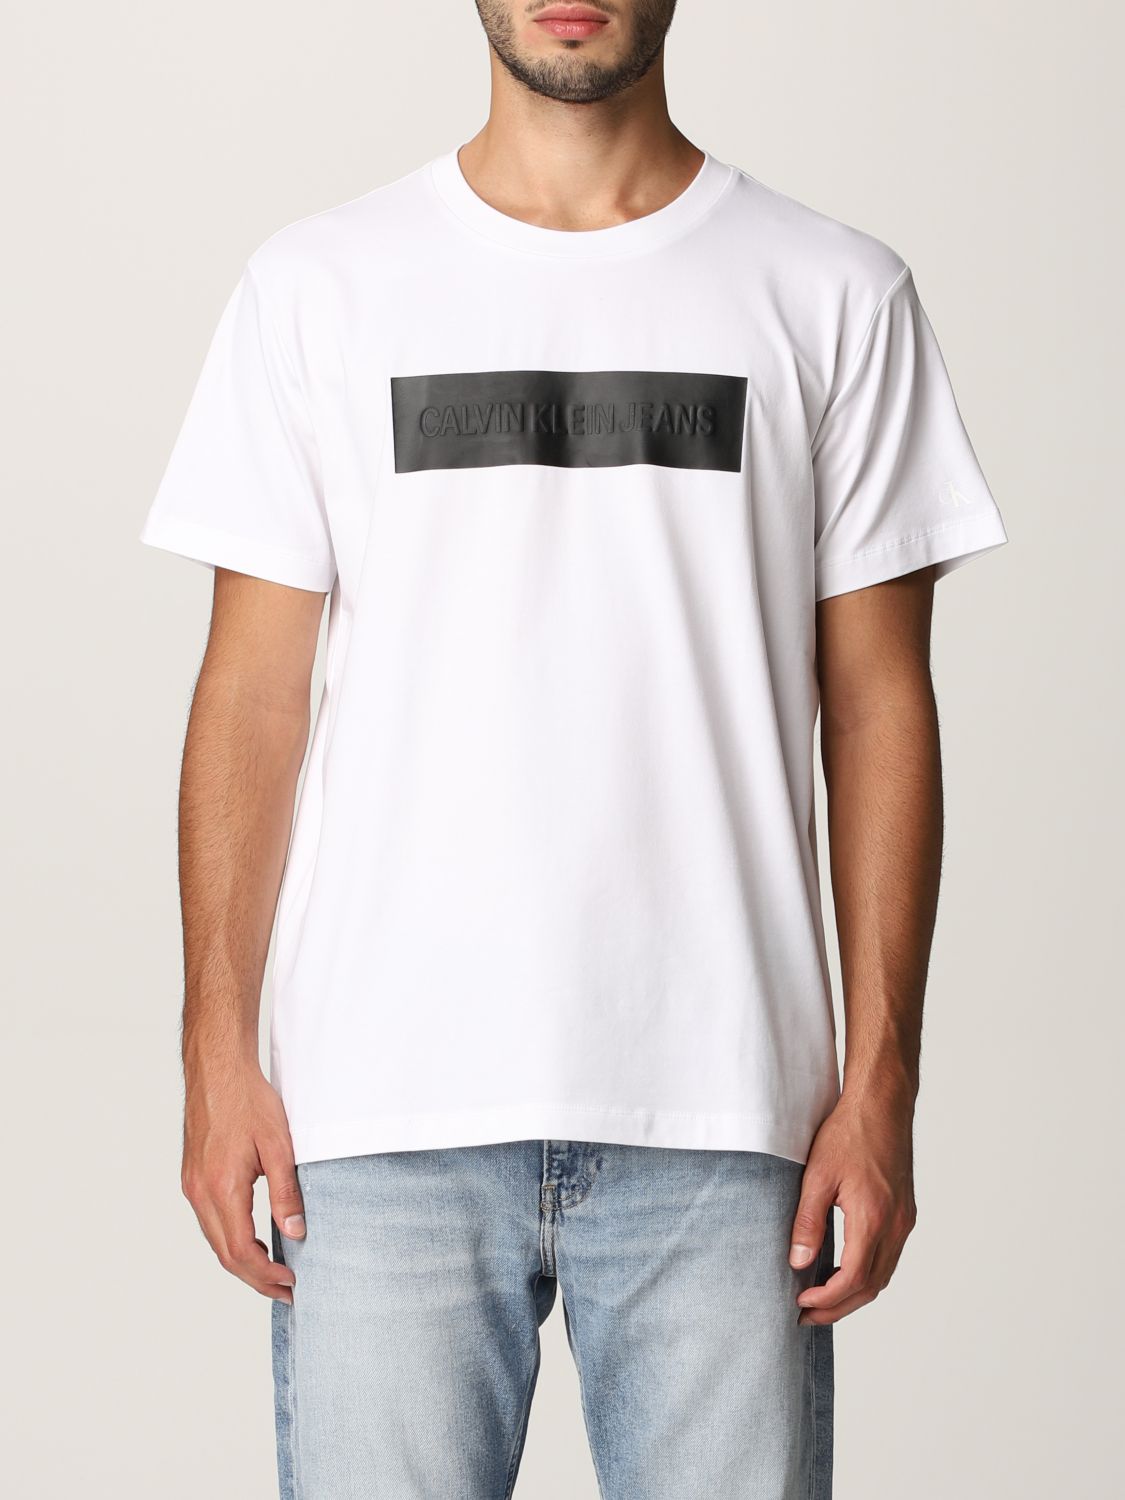 CALVIN KLEIN JEANS: t-shirt for man - White | Calvin Klein Jeans t-shirt  J30J318453 online on 